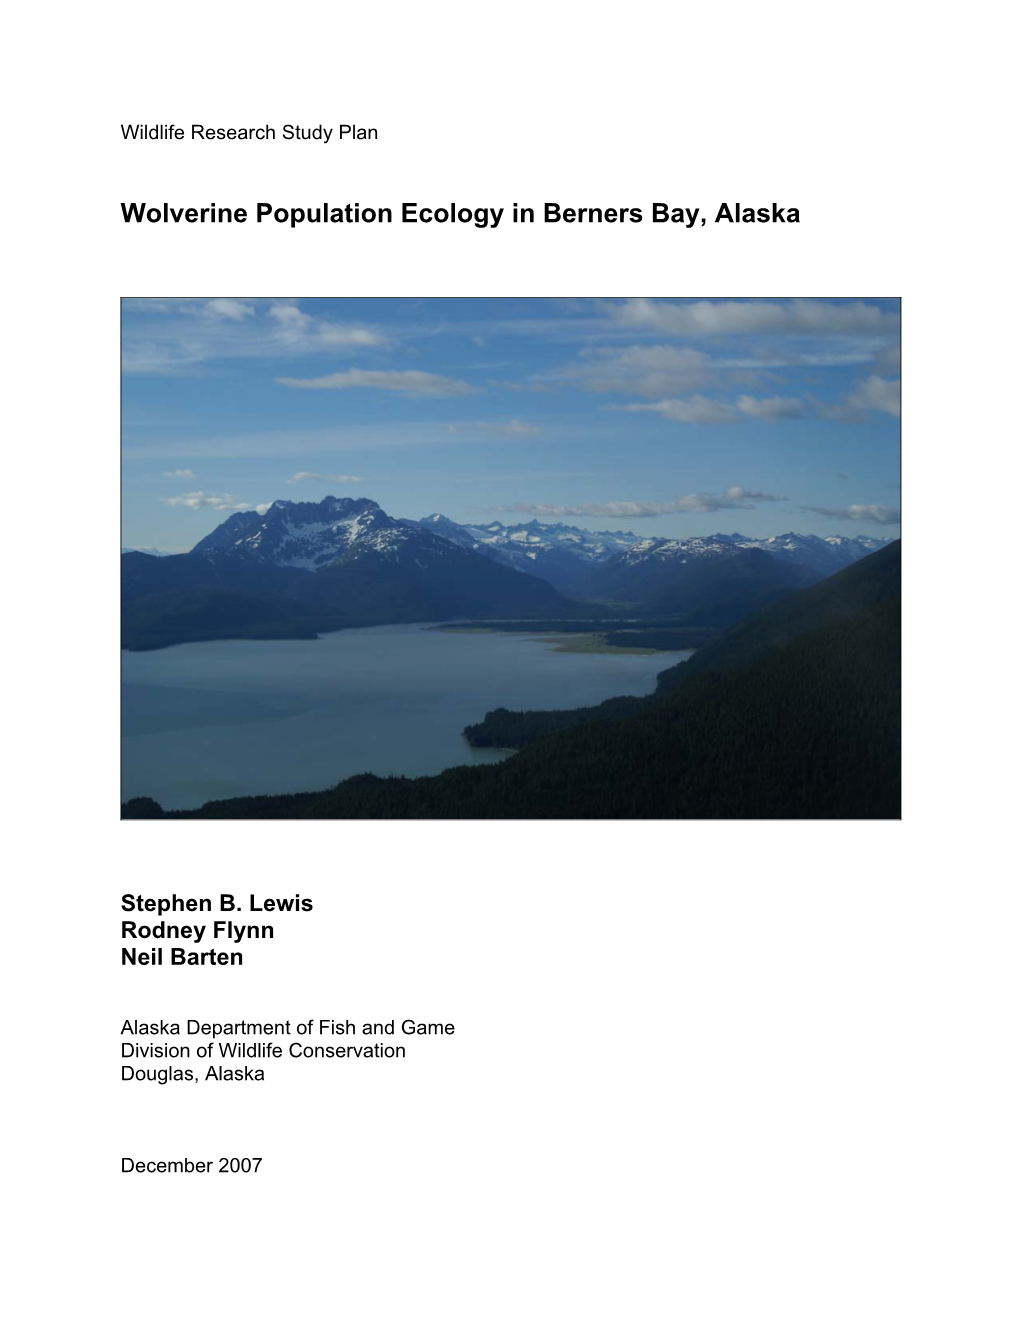 Wolverine Population Ecology in Berners Bay, Alaska – Study Plan